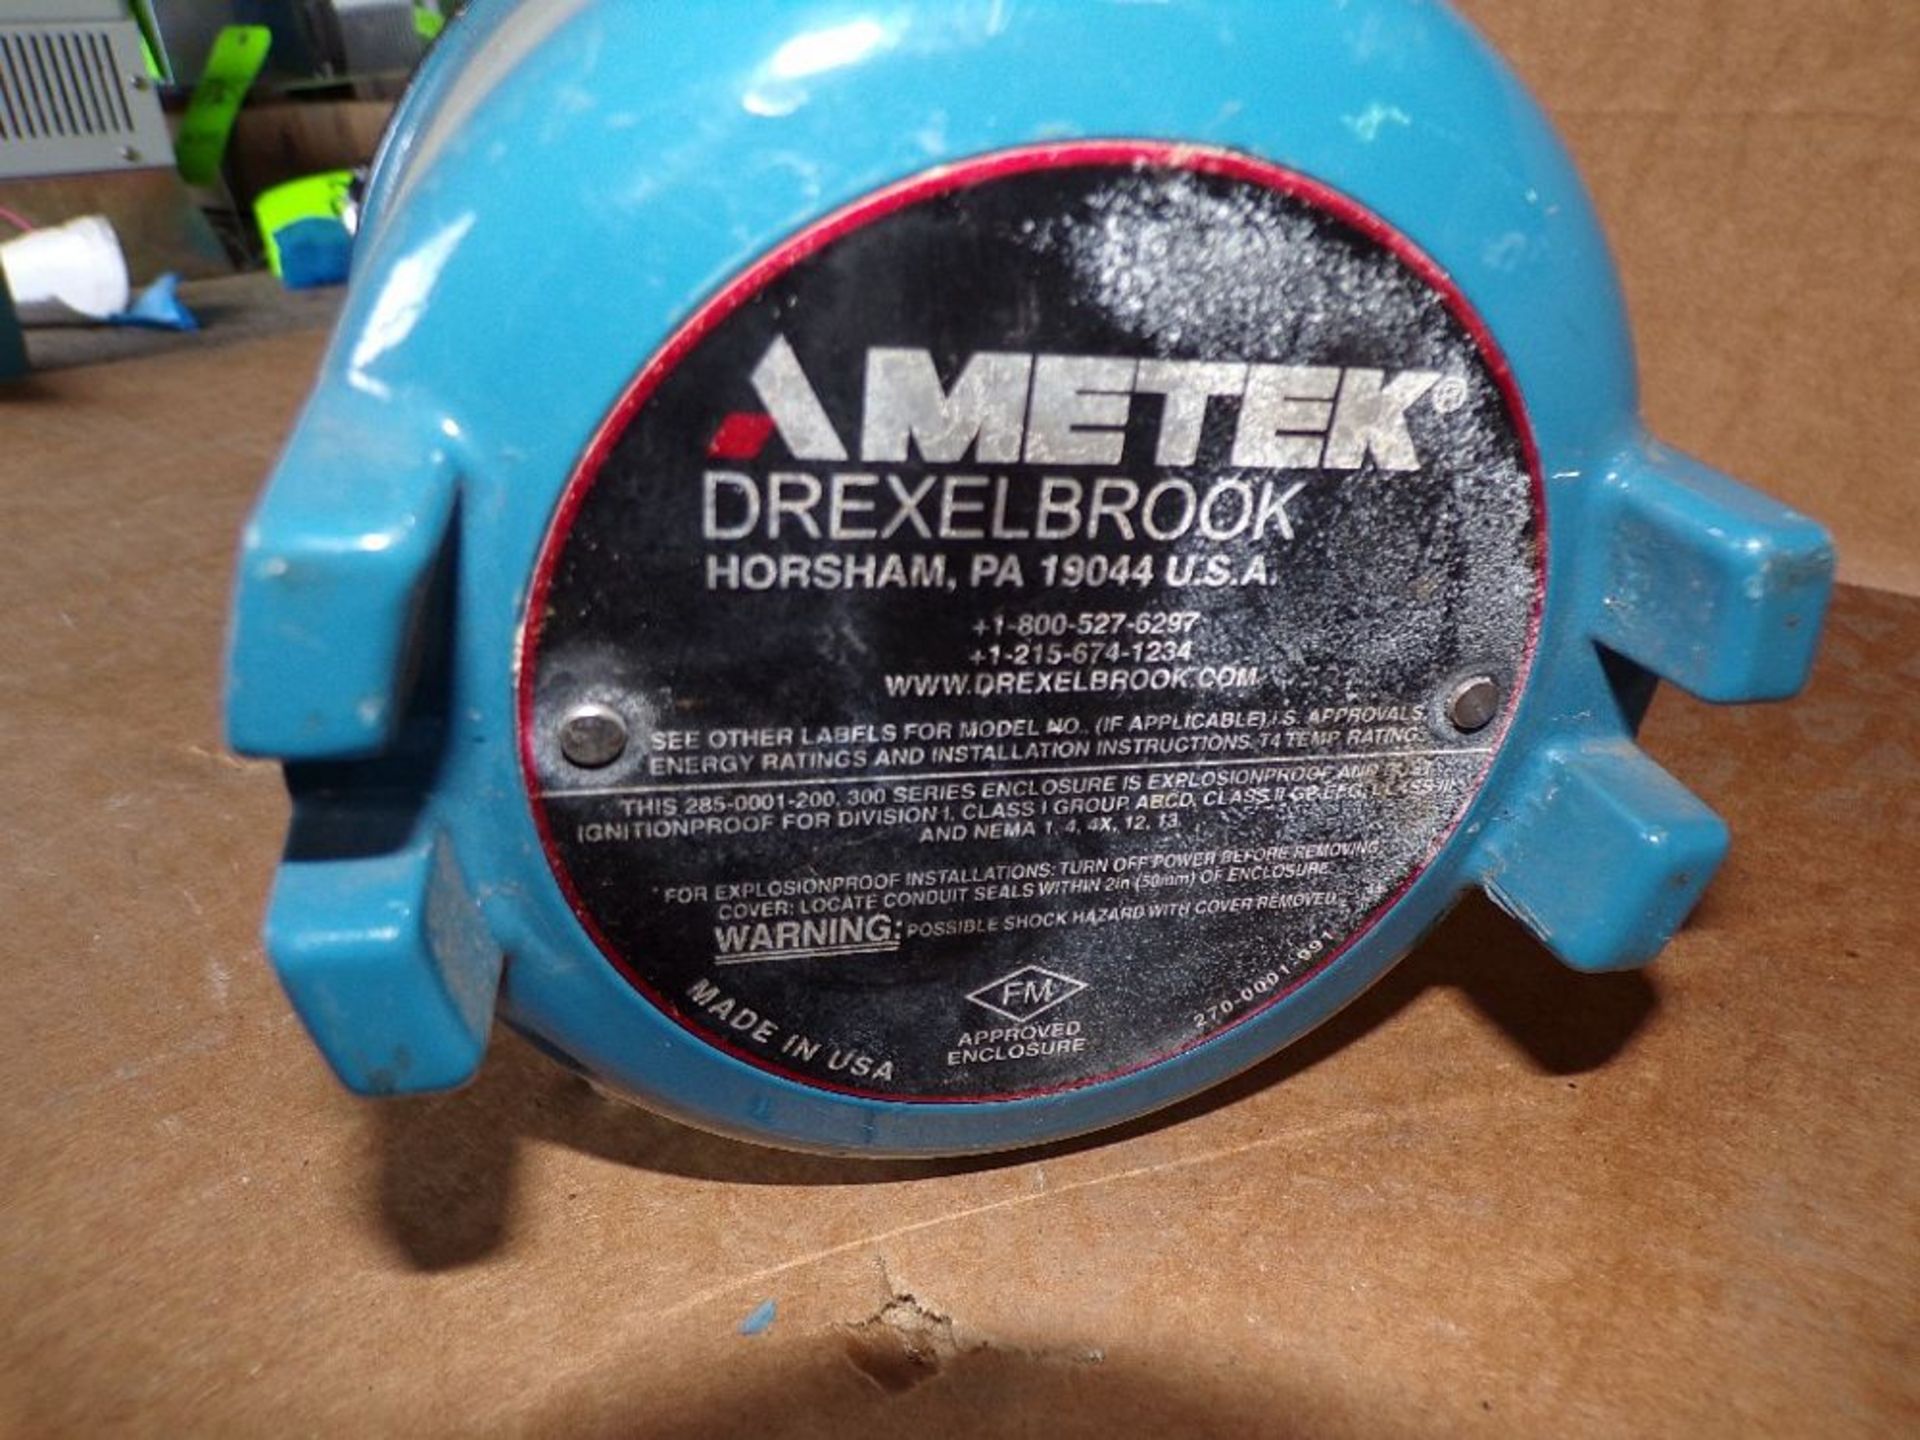 Qty (1) Amatek Drexelbrook 2 1/2 inch sanitary probe type temperature sensor, model: series 700- - Image 3 of 3